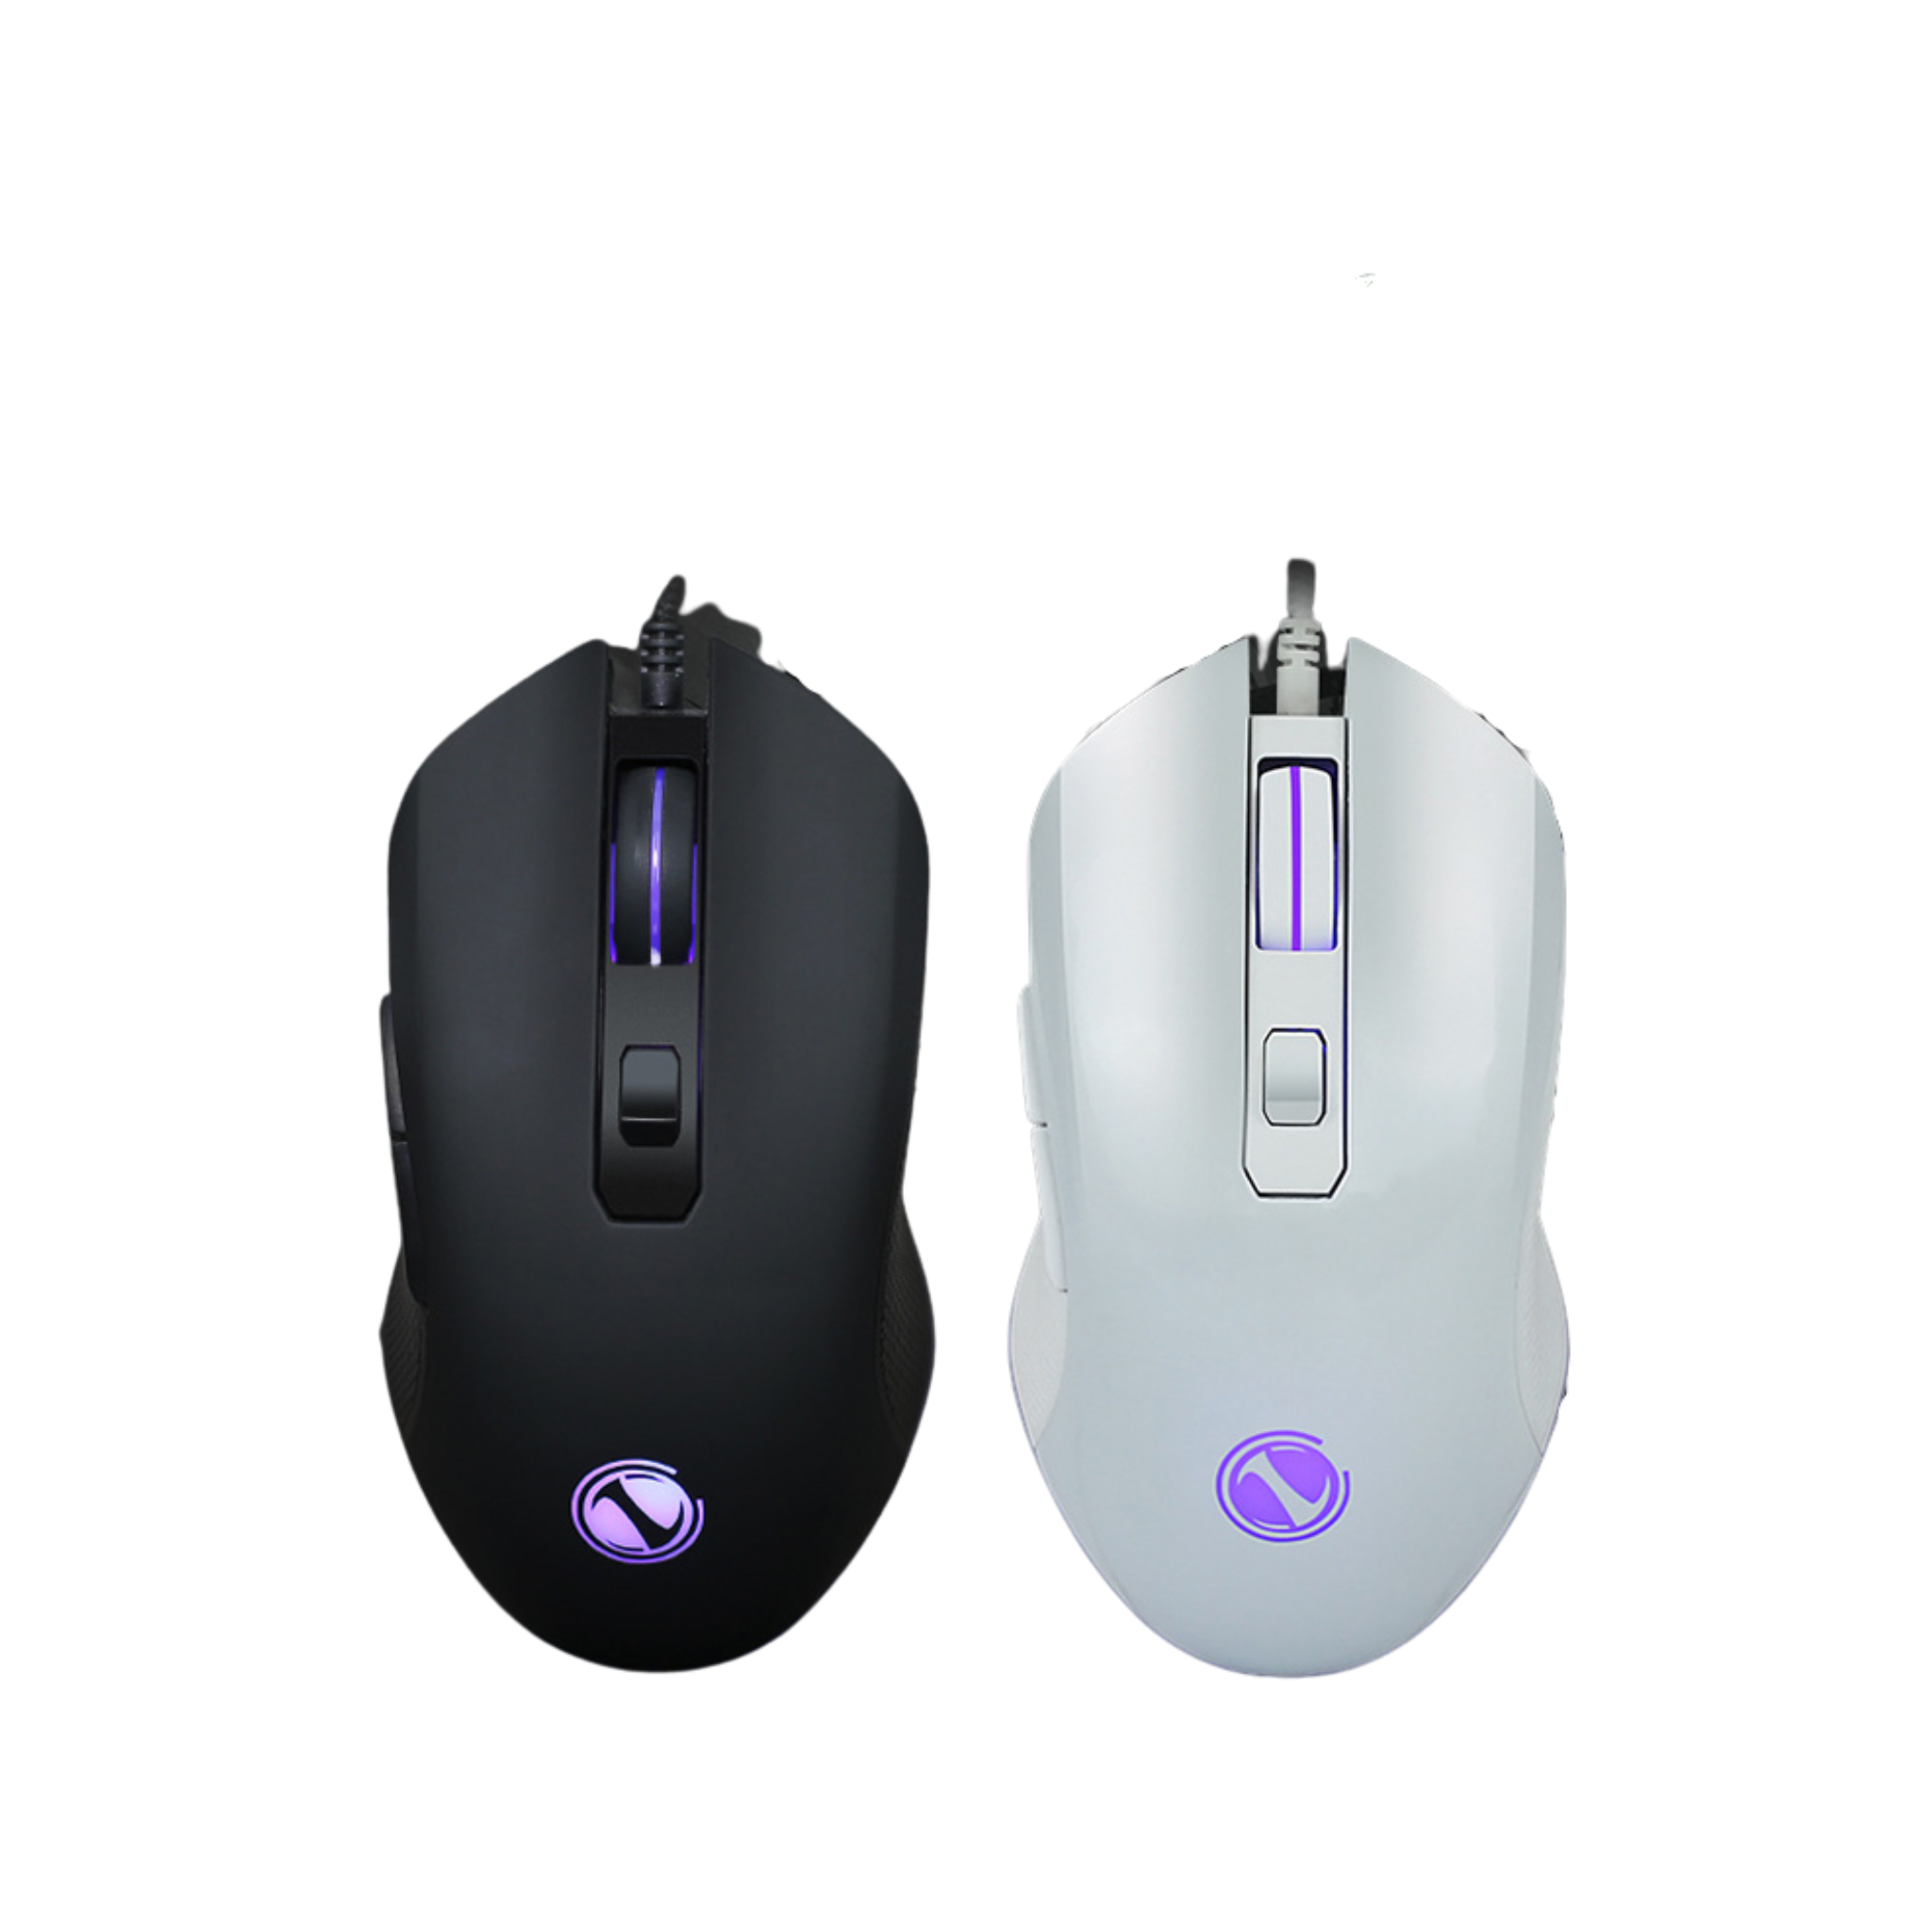 Mouse, 6 Buttons RGB Backlight, for Desktop Computer/Laptops